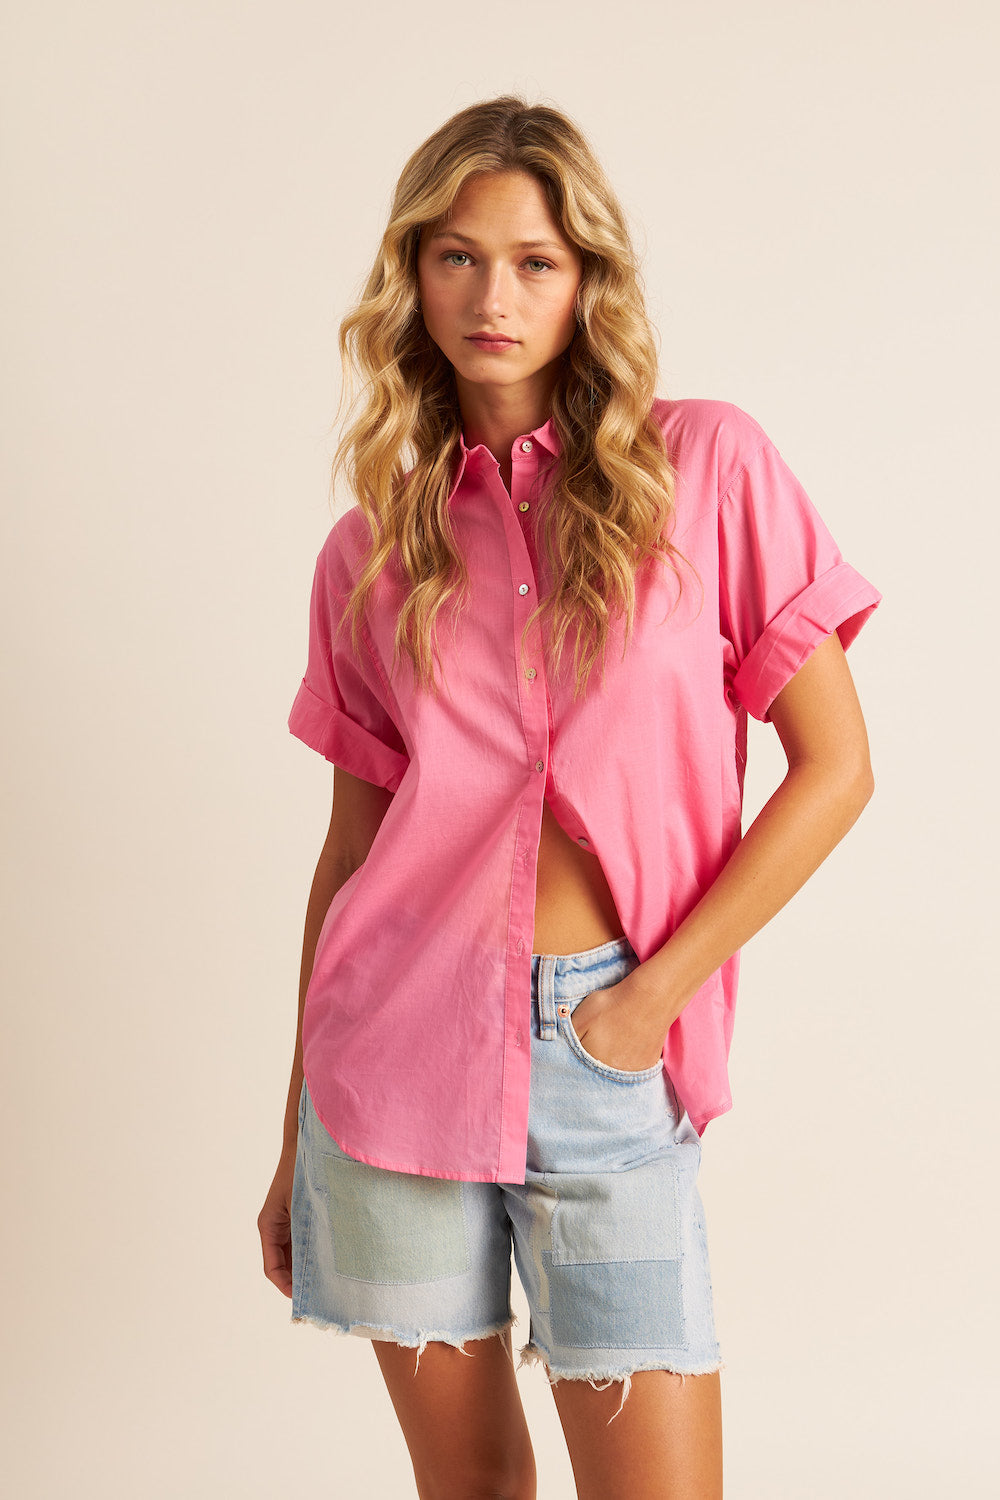 John & Jenn Shay Top - Skipper Pink Clothing - Tops - Shirts - Blouses - Blouses Opening Price by John & Jenn | Grace the Boutique